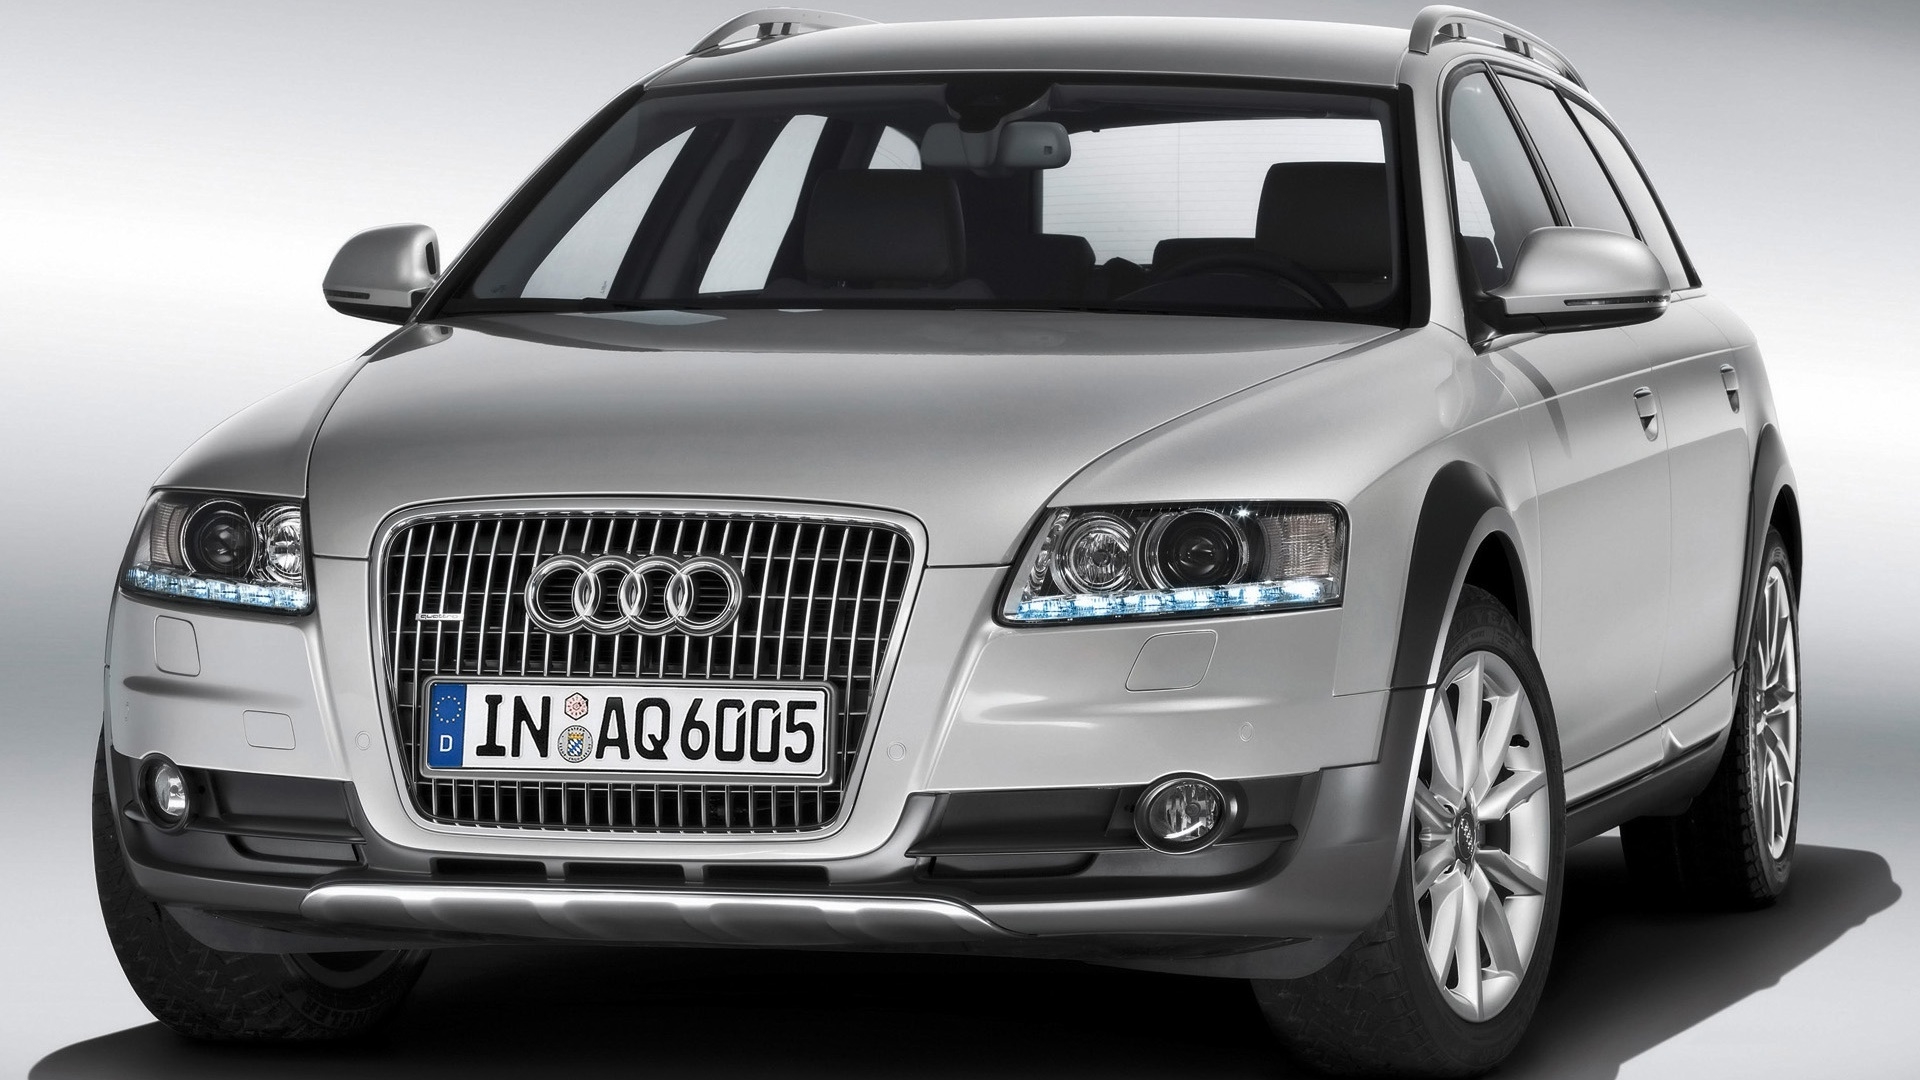 2009 Audi A6 allroad quattro - Front Angle for 1920 x 1080 HDTV 1080p resolution